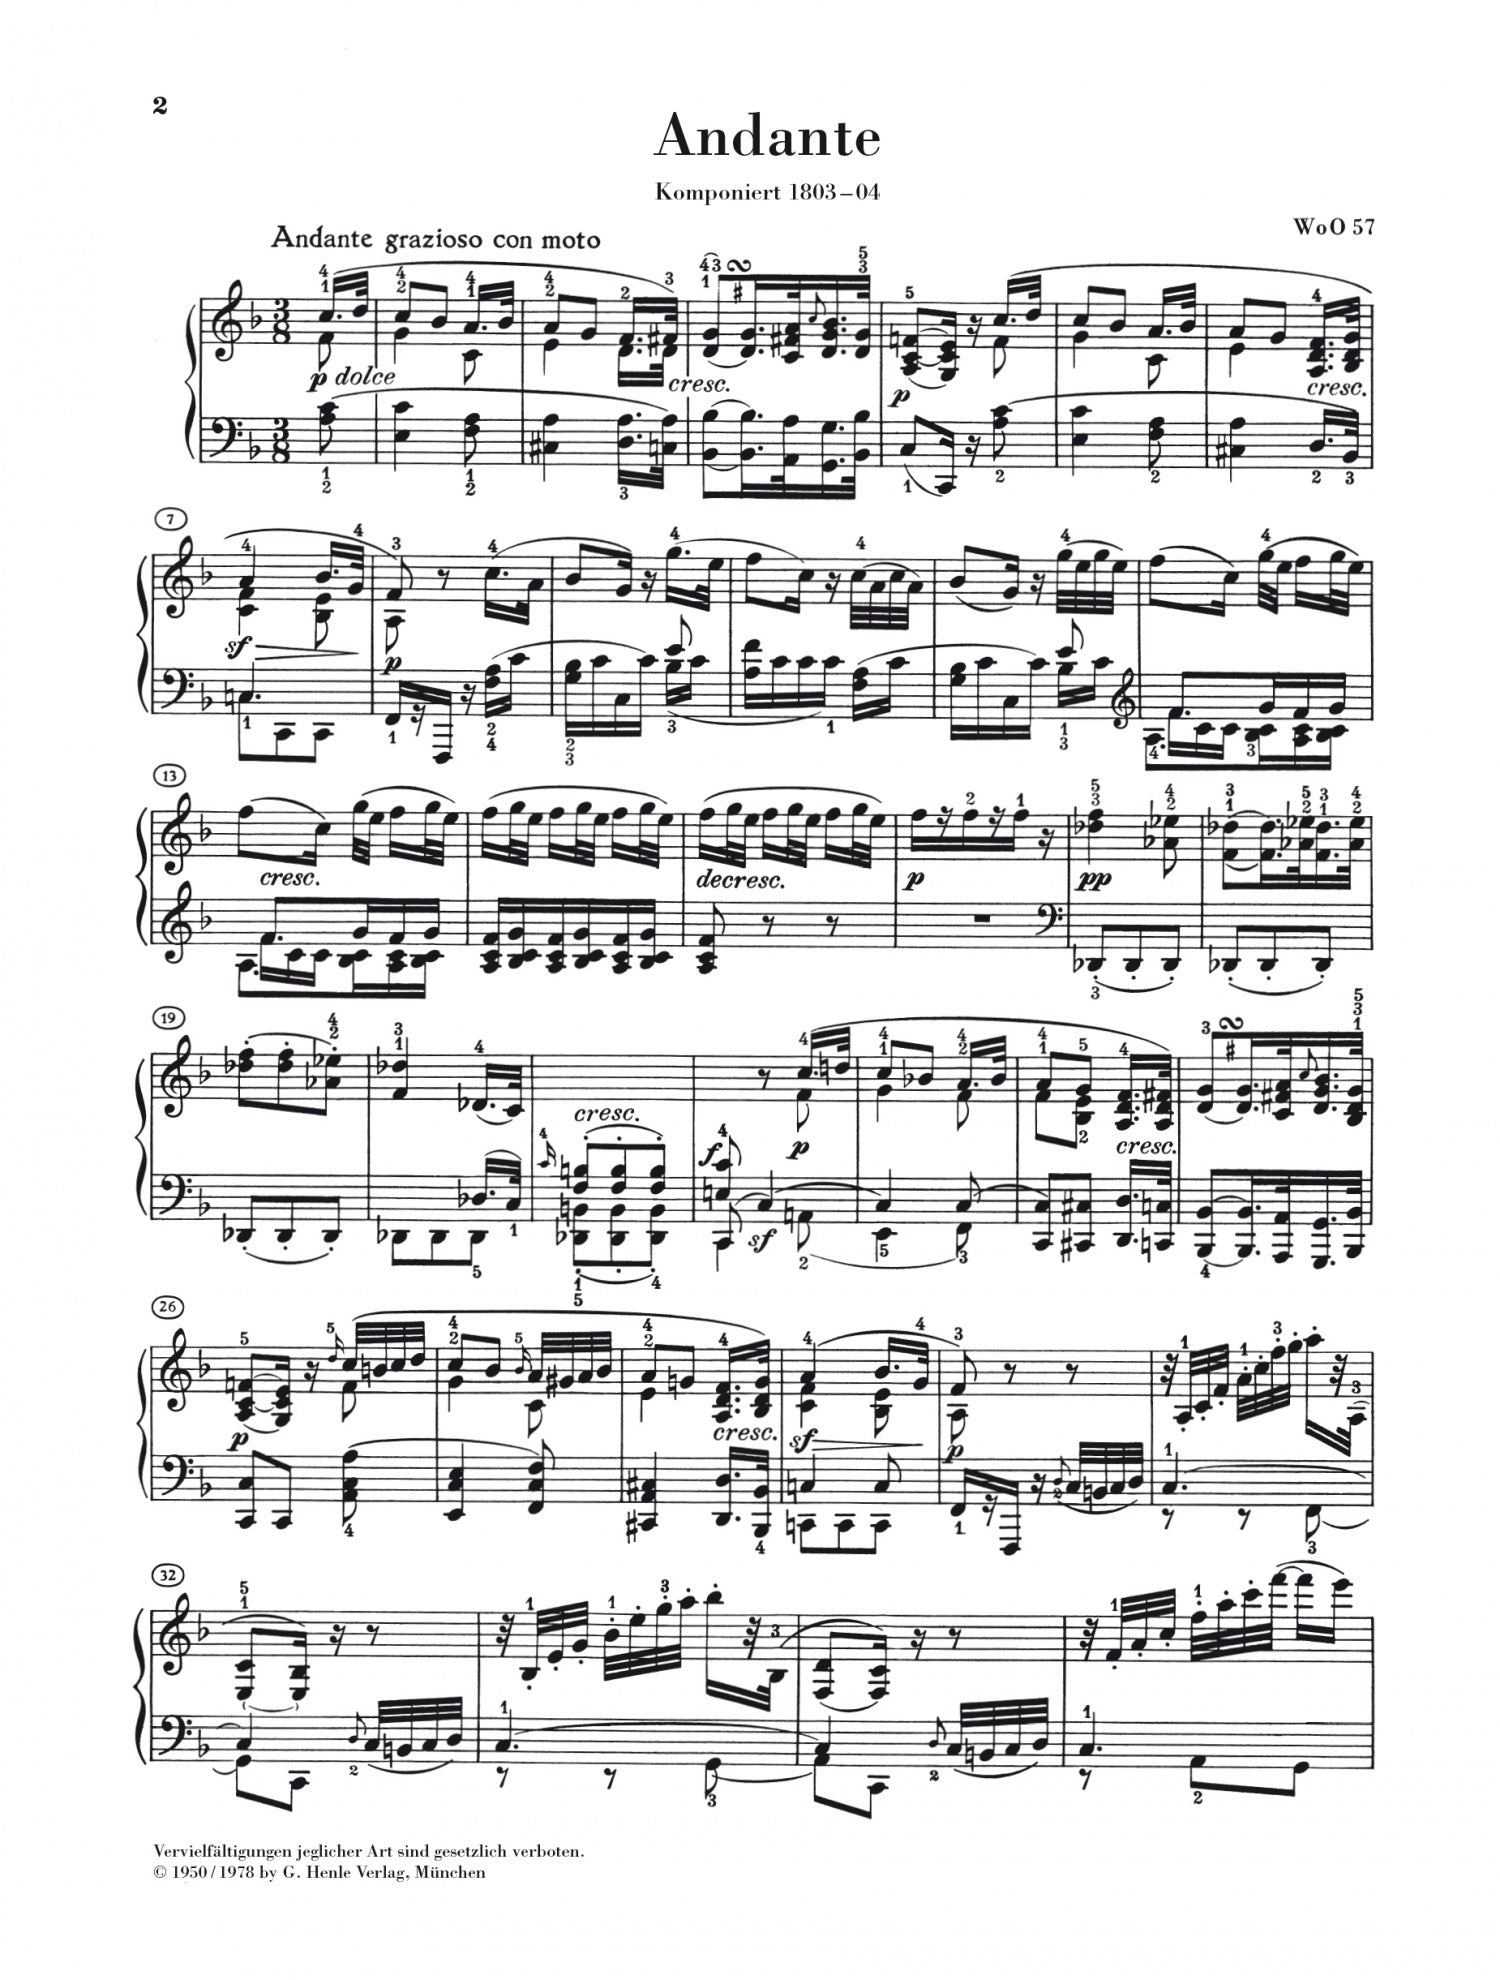 Beethoven: Andante in F Major WoO 57 (Andante favori) for Piano Solo